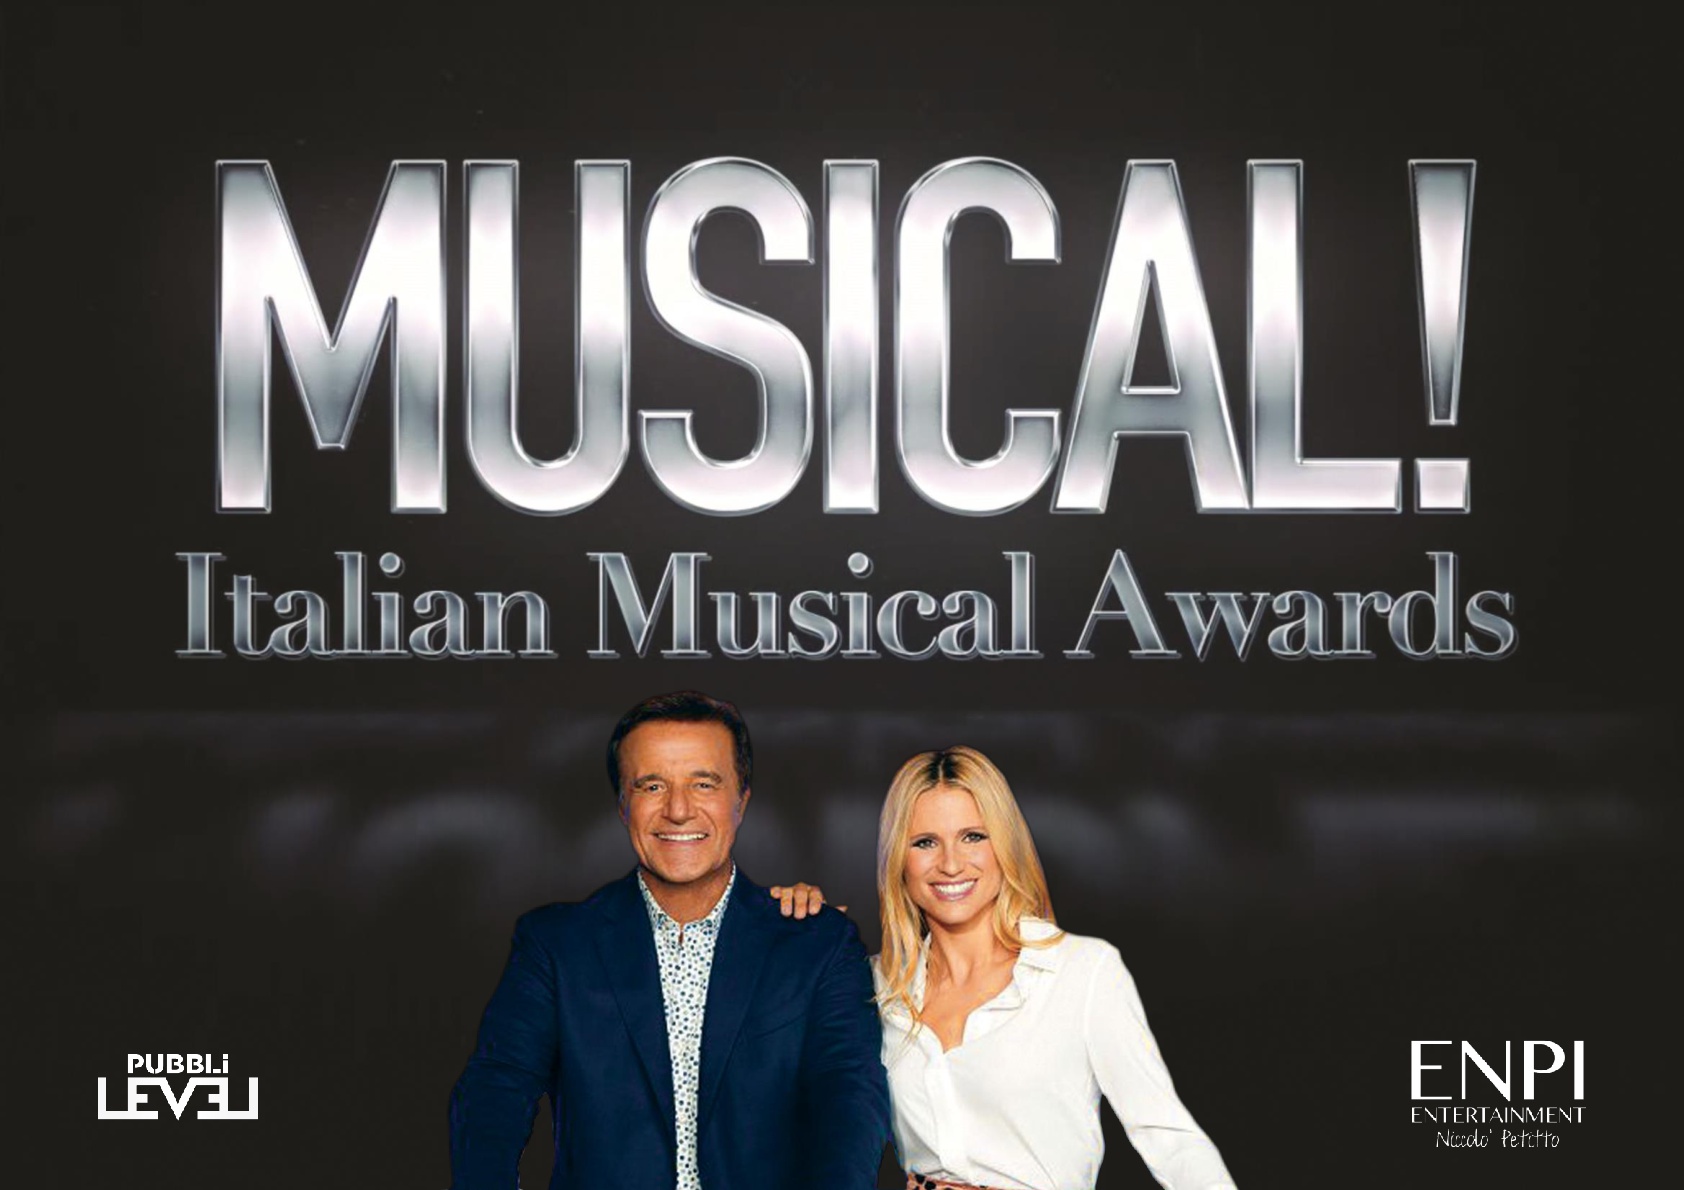 Italian Musical Awards